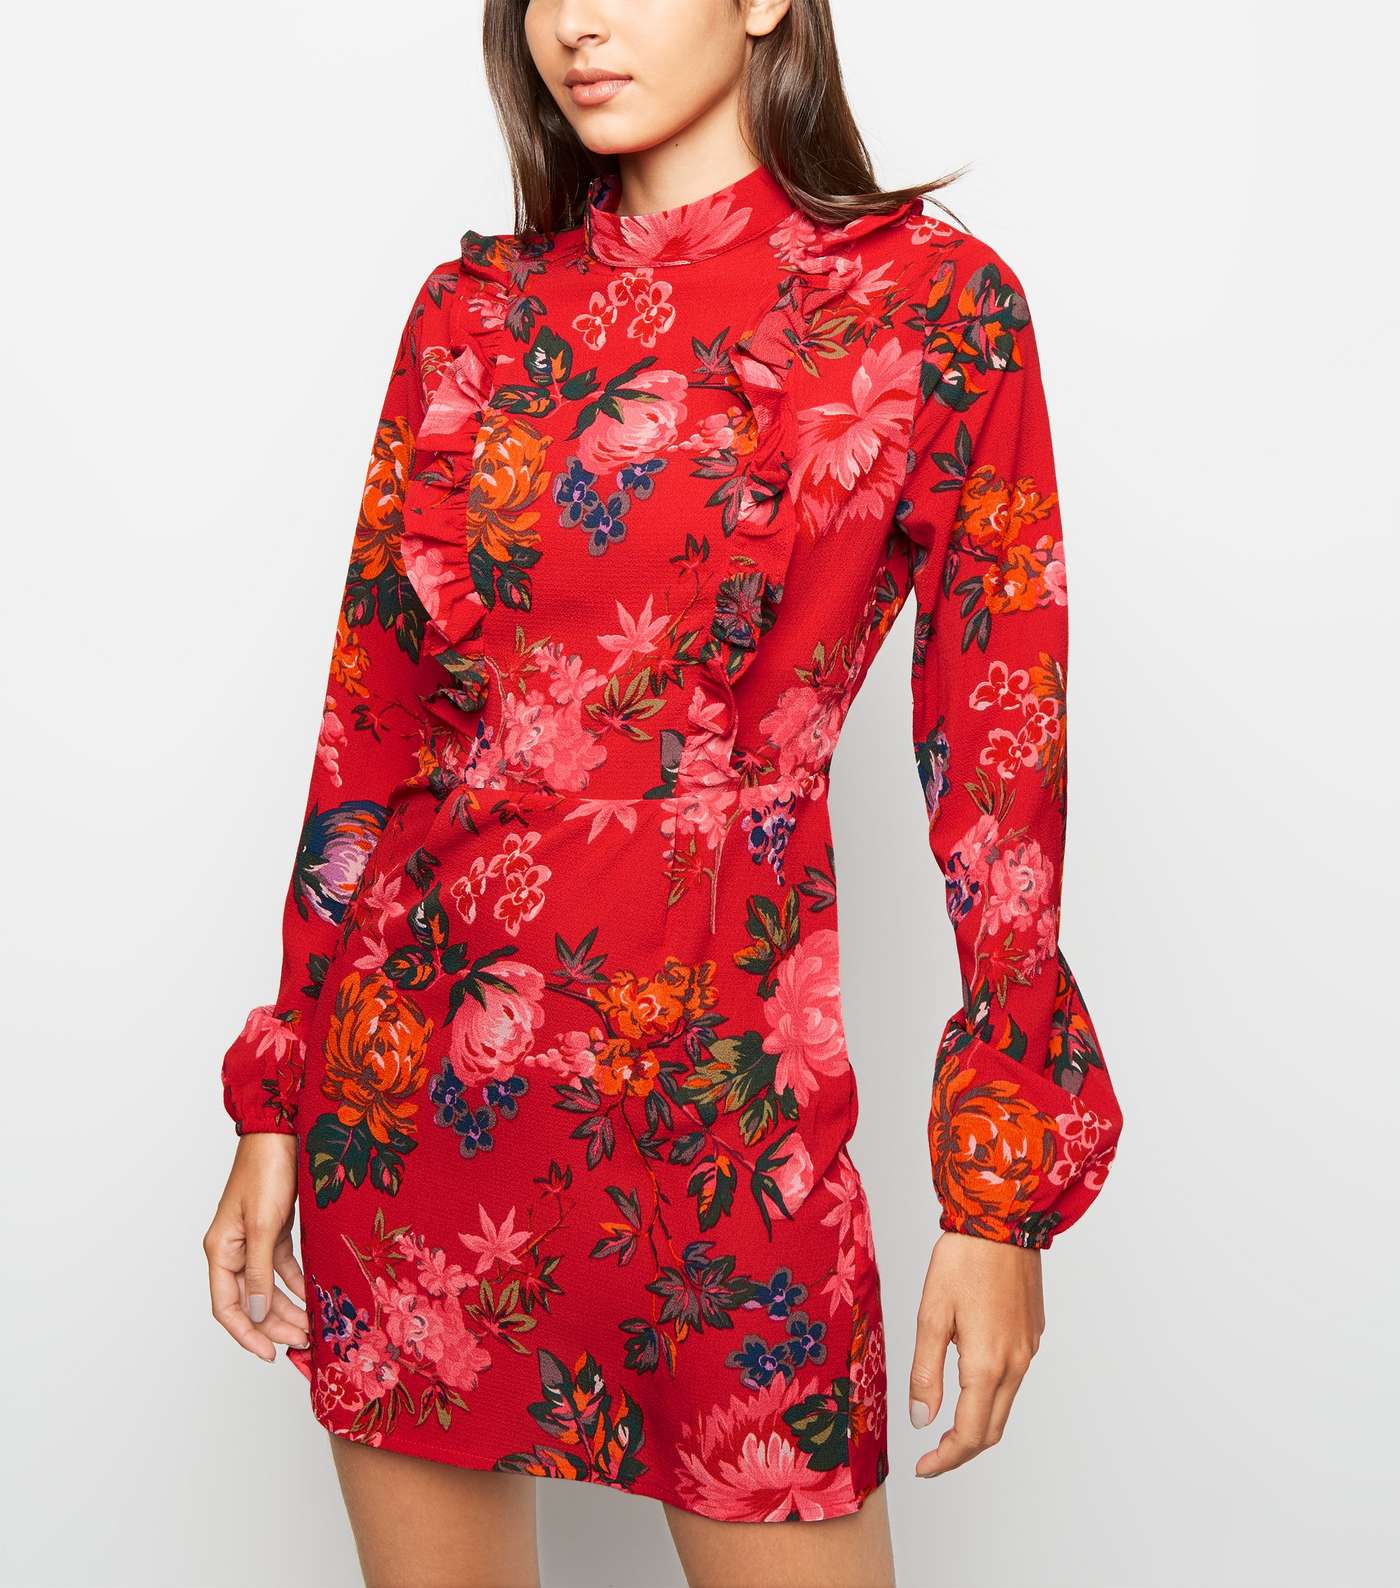 AX Paris Red Floral Print Frill Front Dress